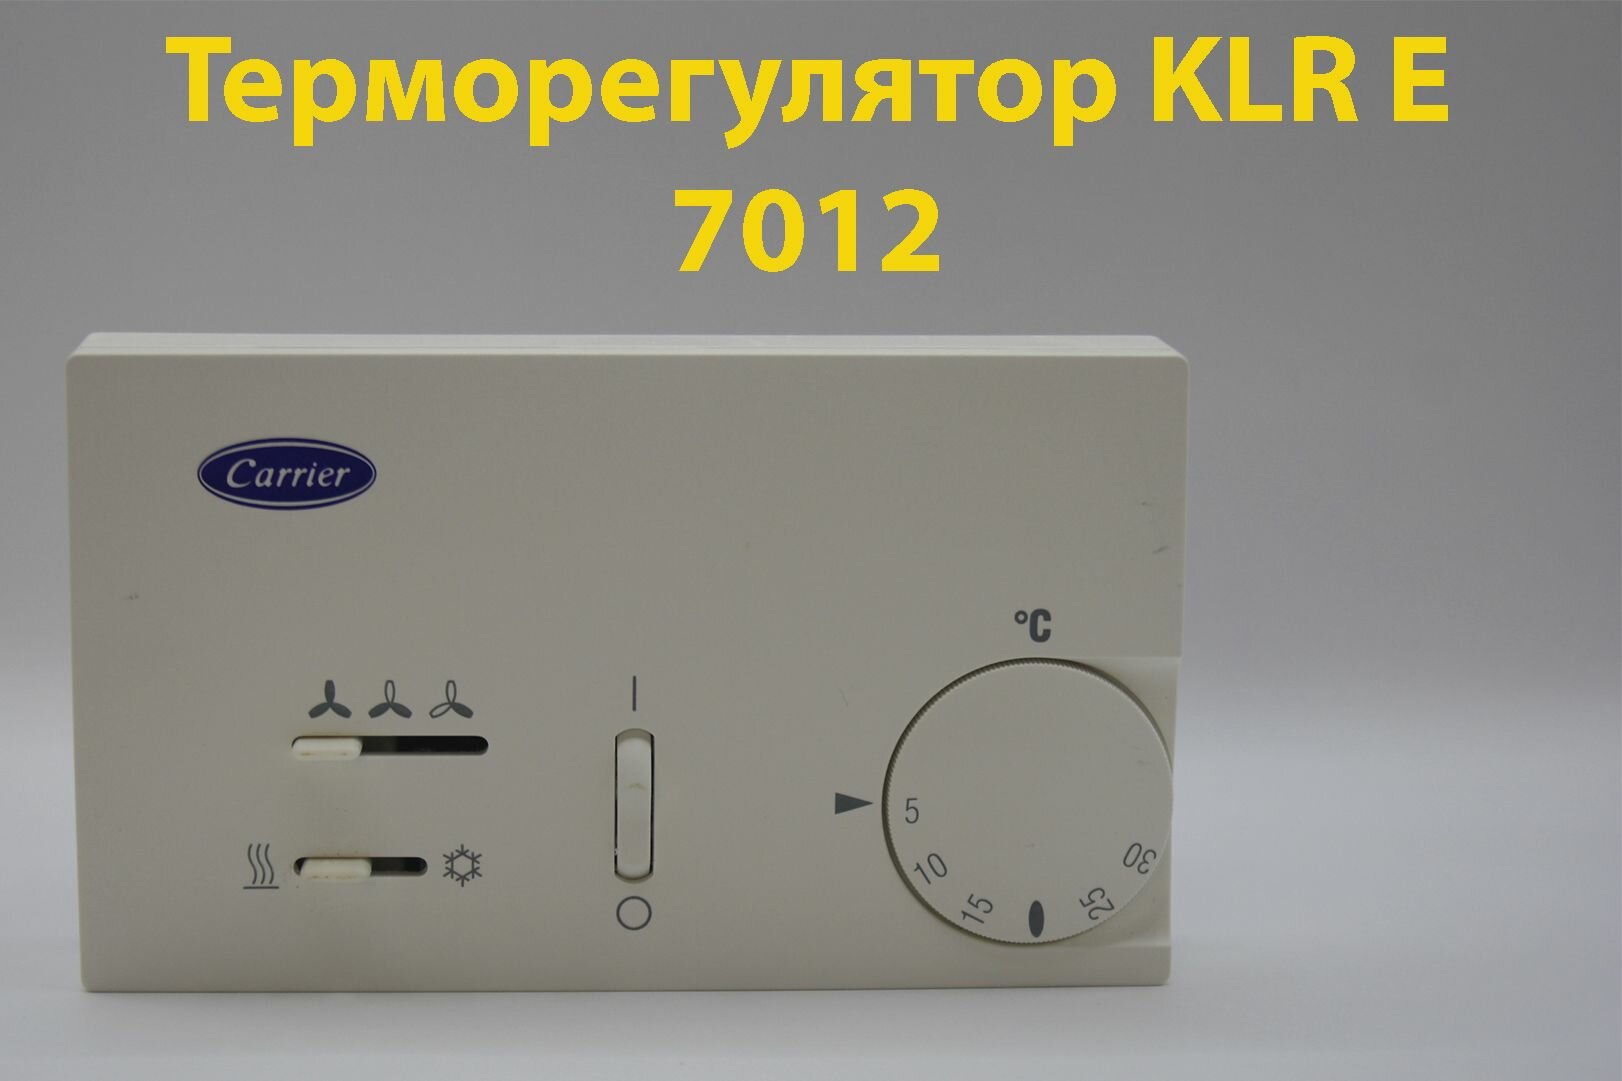 Терморегулятор (термостат) Carrier KLR-E 7012